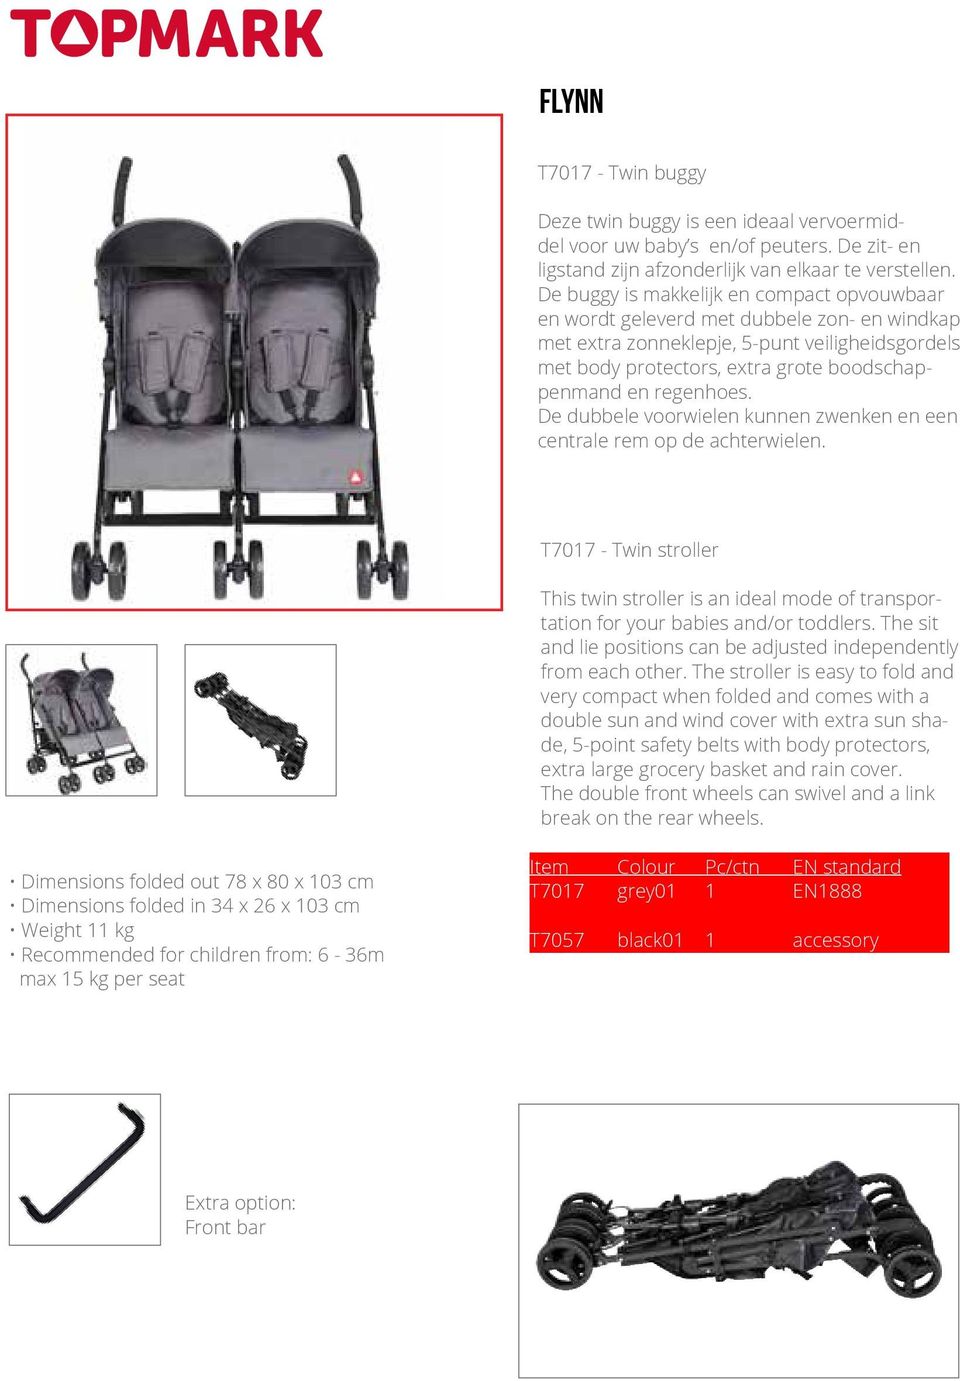 regenhoes. De dubbele voorwielen kunnen zwenken en een centrale rem op de achterwielen. T7017 - Twin stroller This twin stroller is an ideal mode of transportation for your babies and/or toddlers.